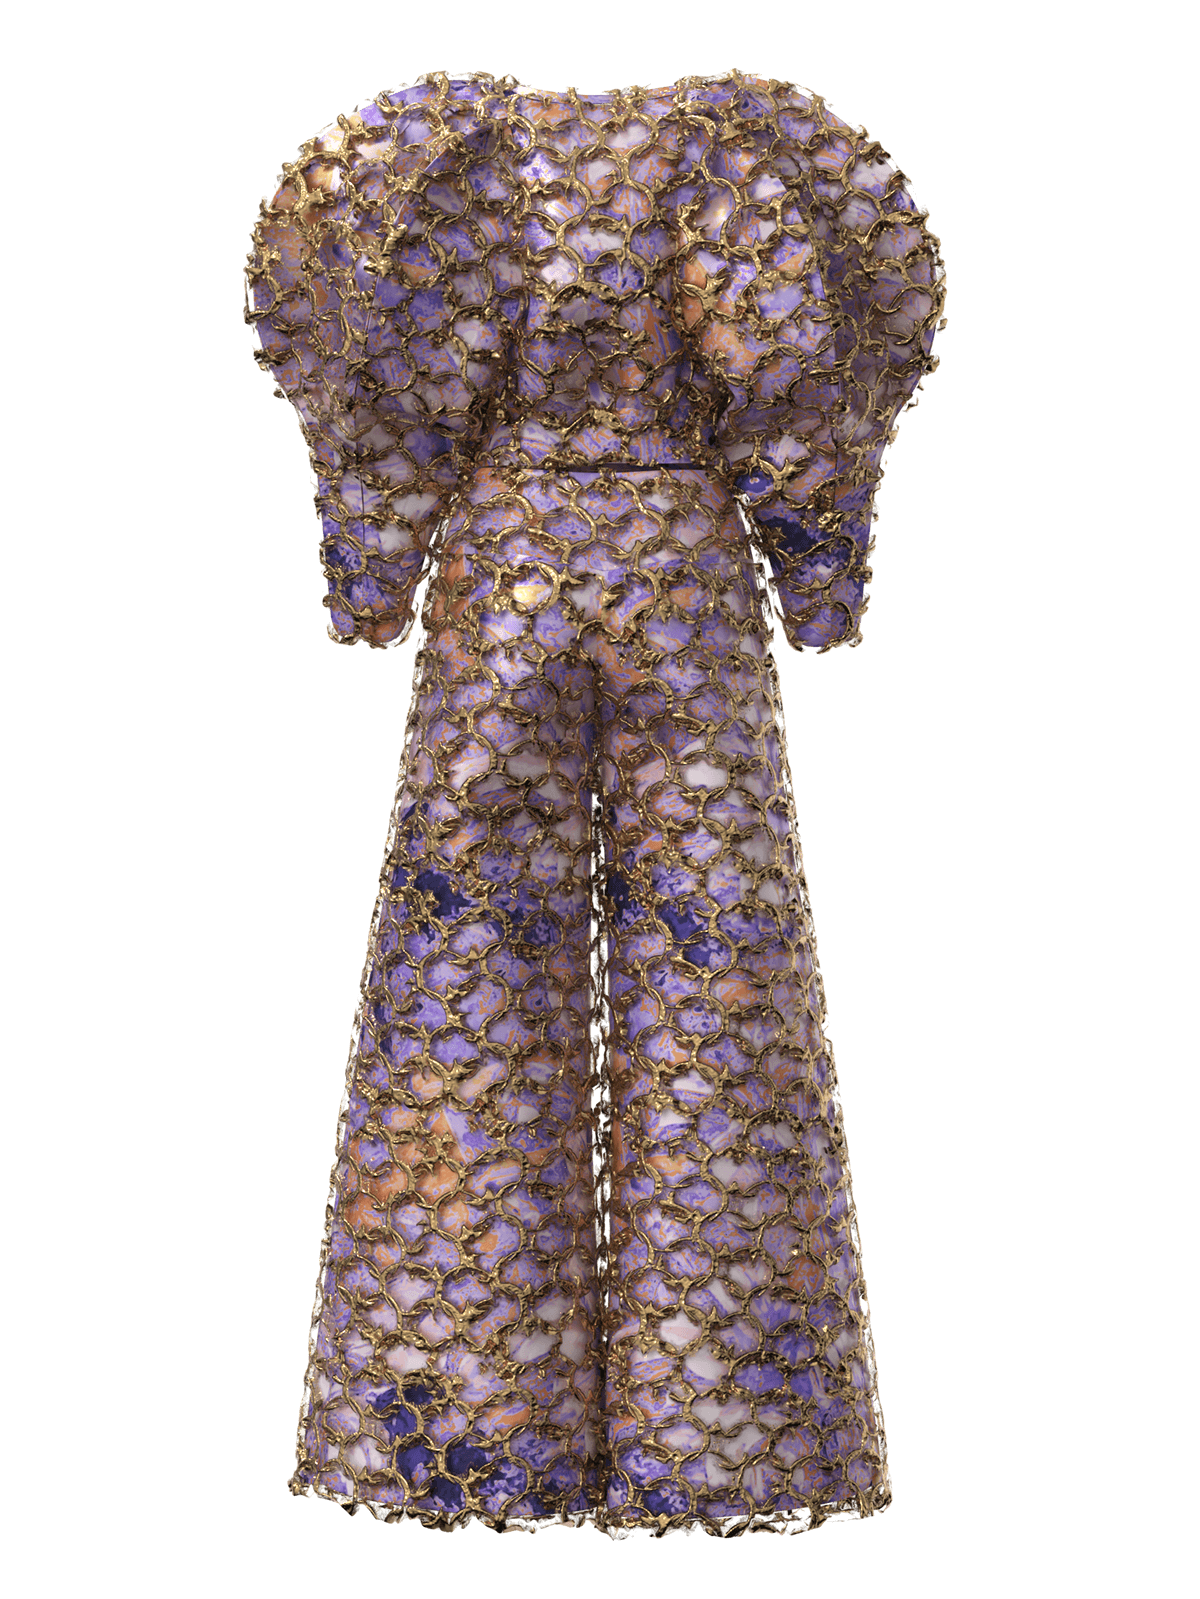 digital fashion Clo3d 3D Clothing virtual fashion marvelous designer 3d dress model AR fashion AR clothing Low poly dress model